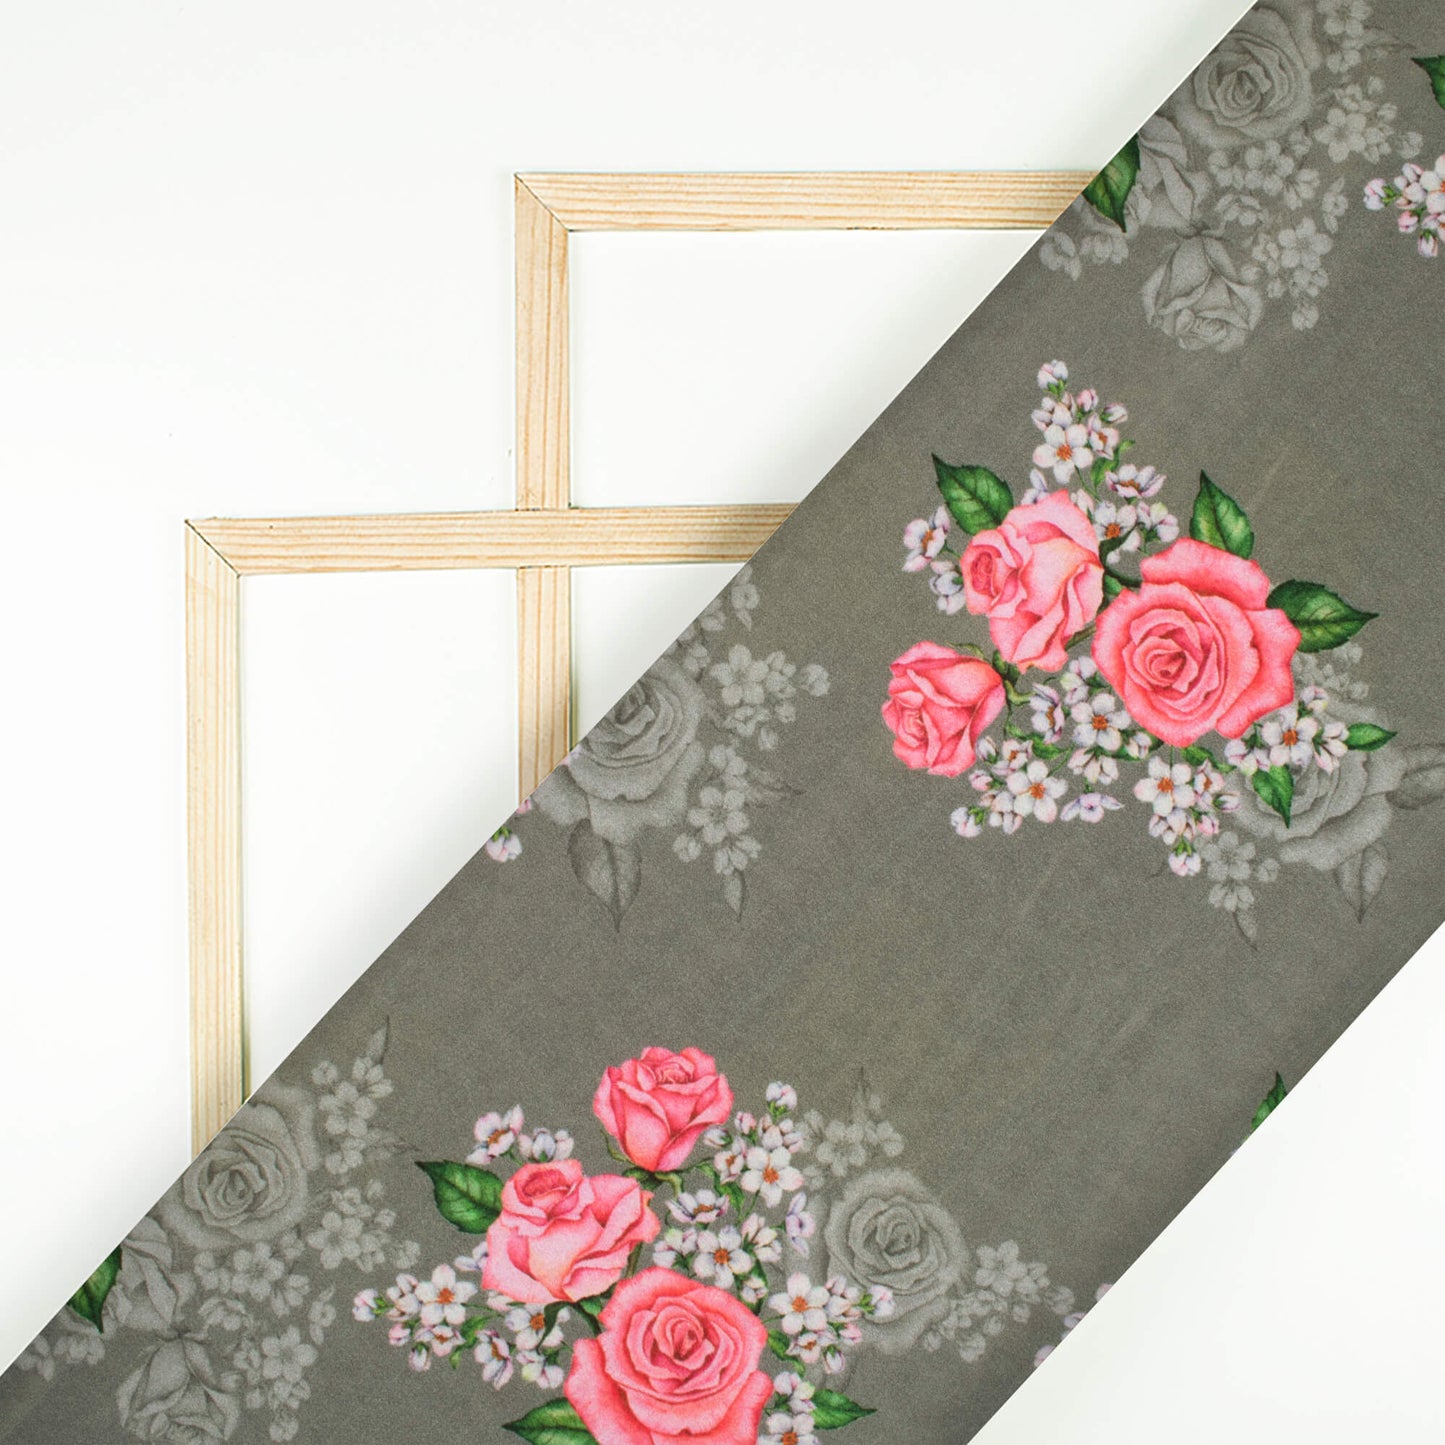 Artichoke Green And Rose Pink Floral Pattern Digital Print Lush Satin Fabric